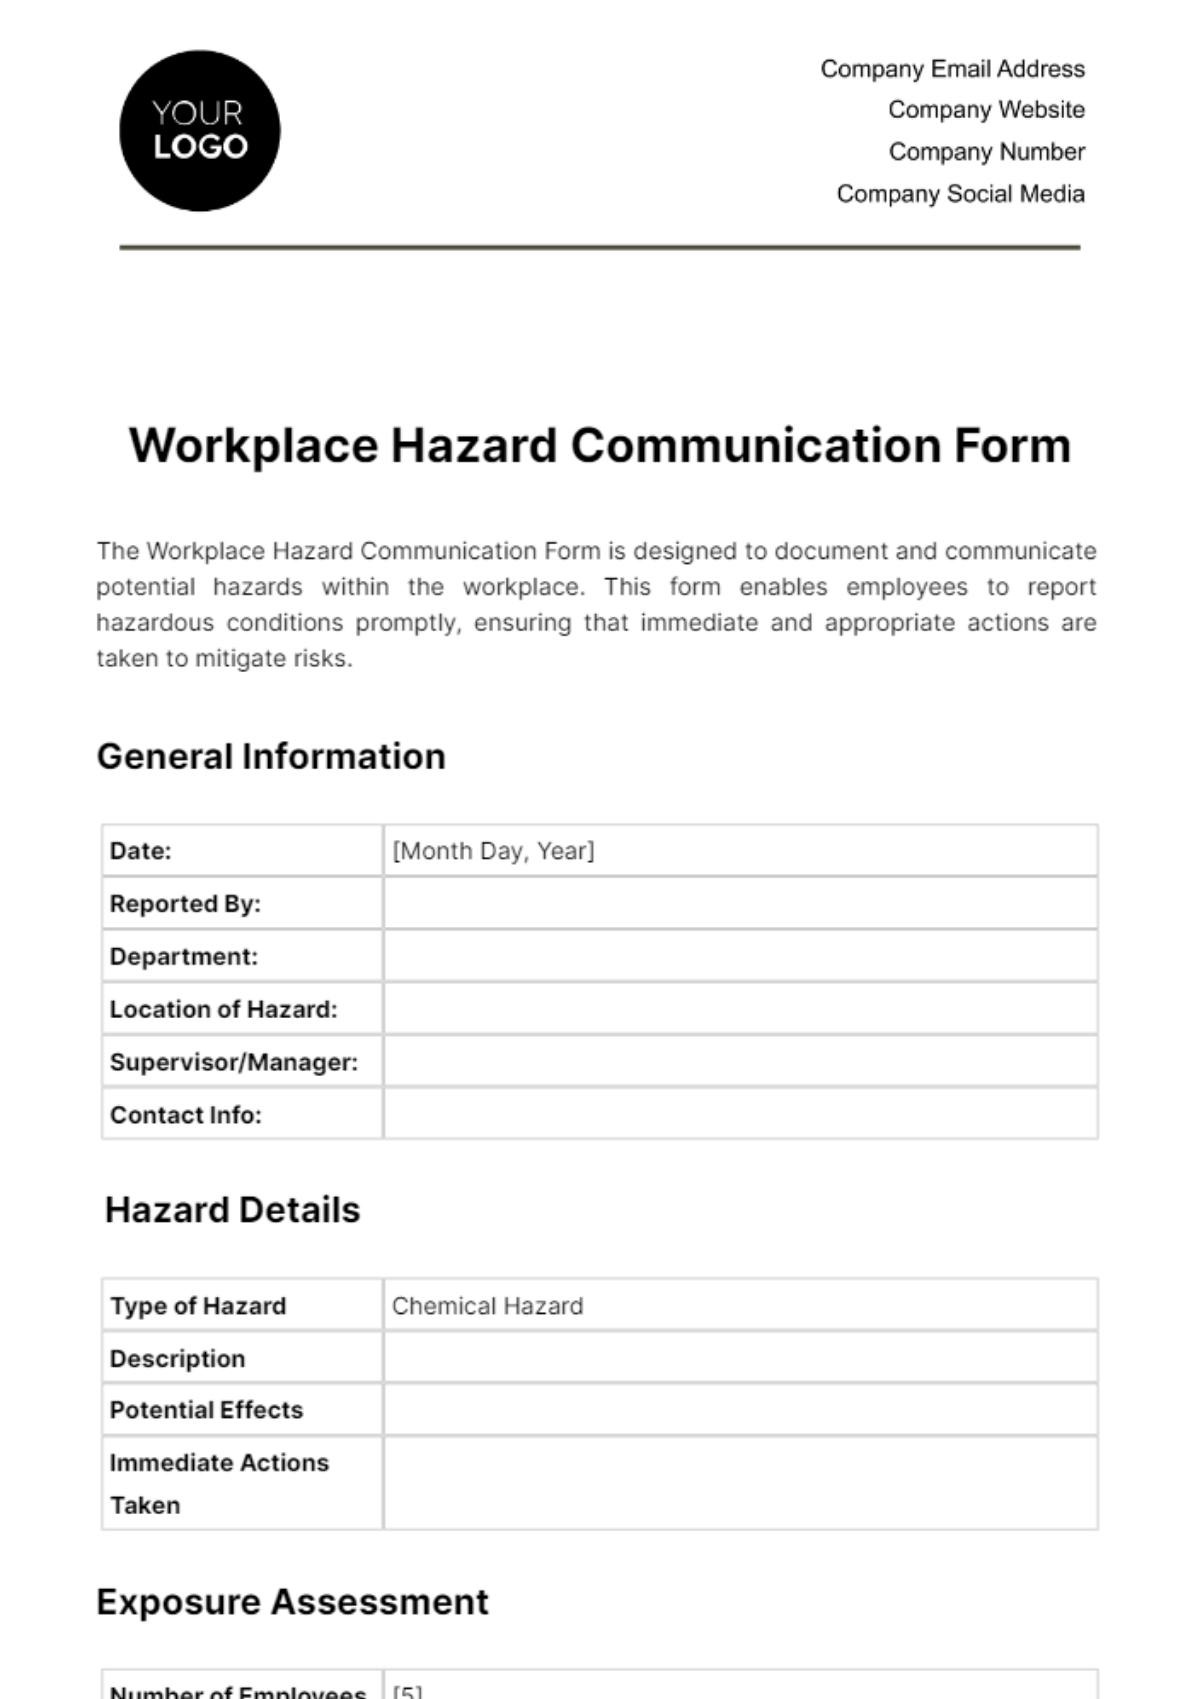 Free Workplace Hazard Communication Form Template